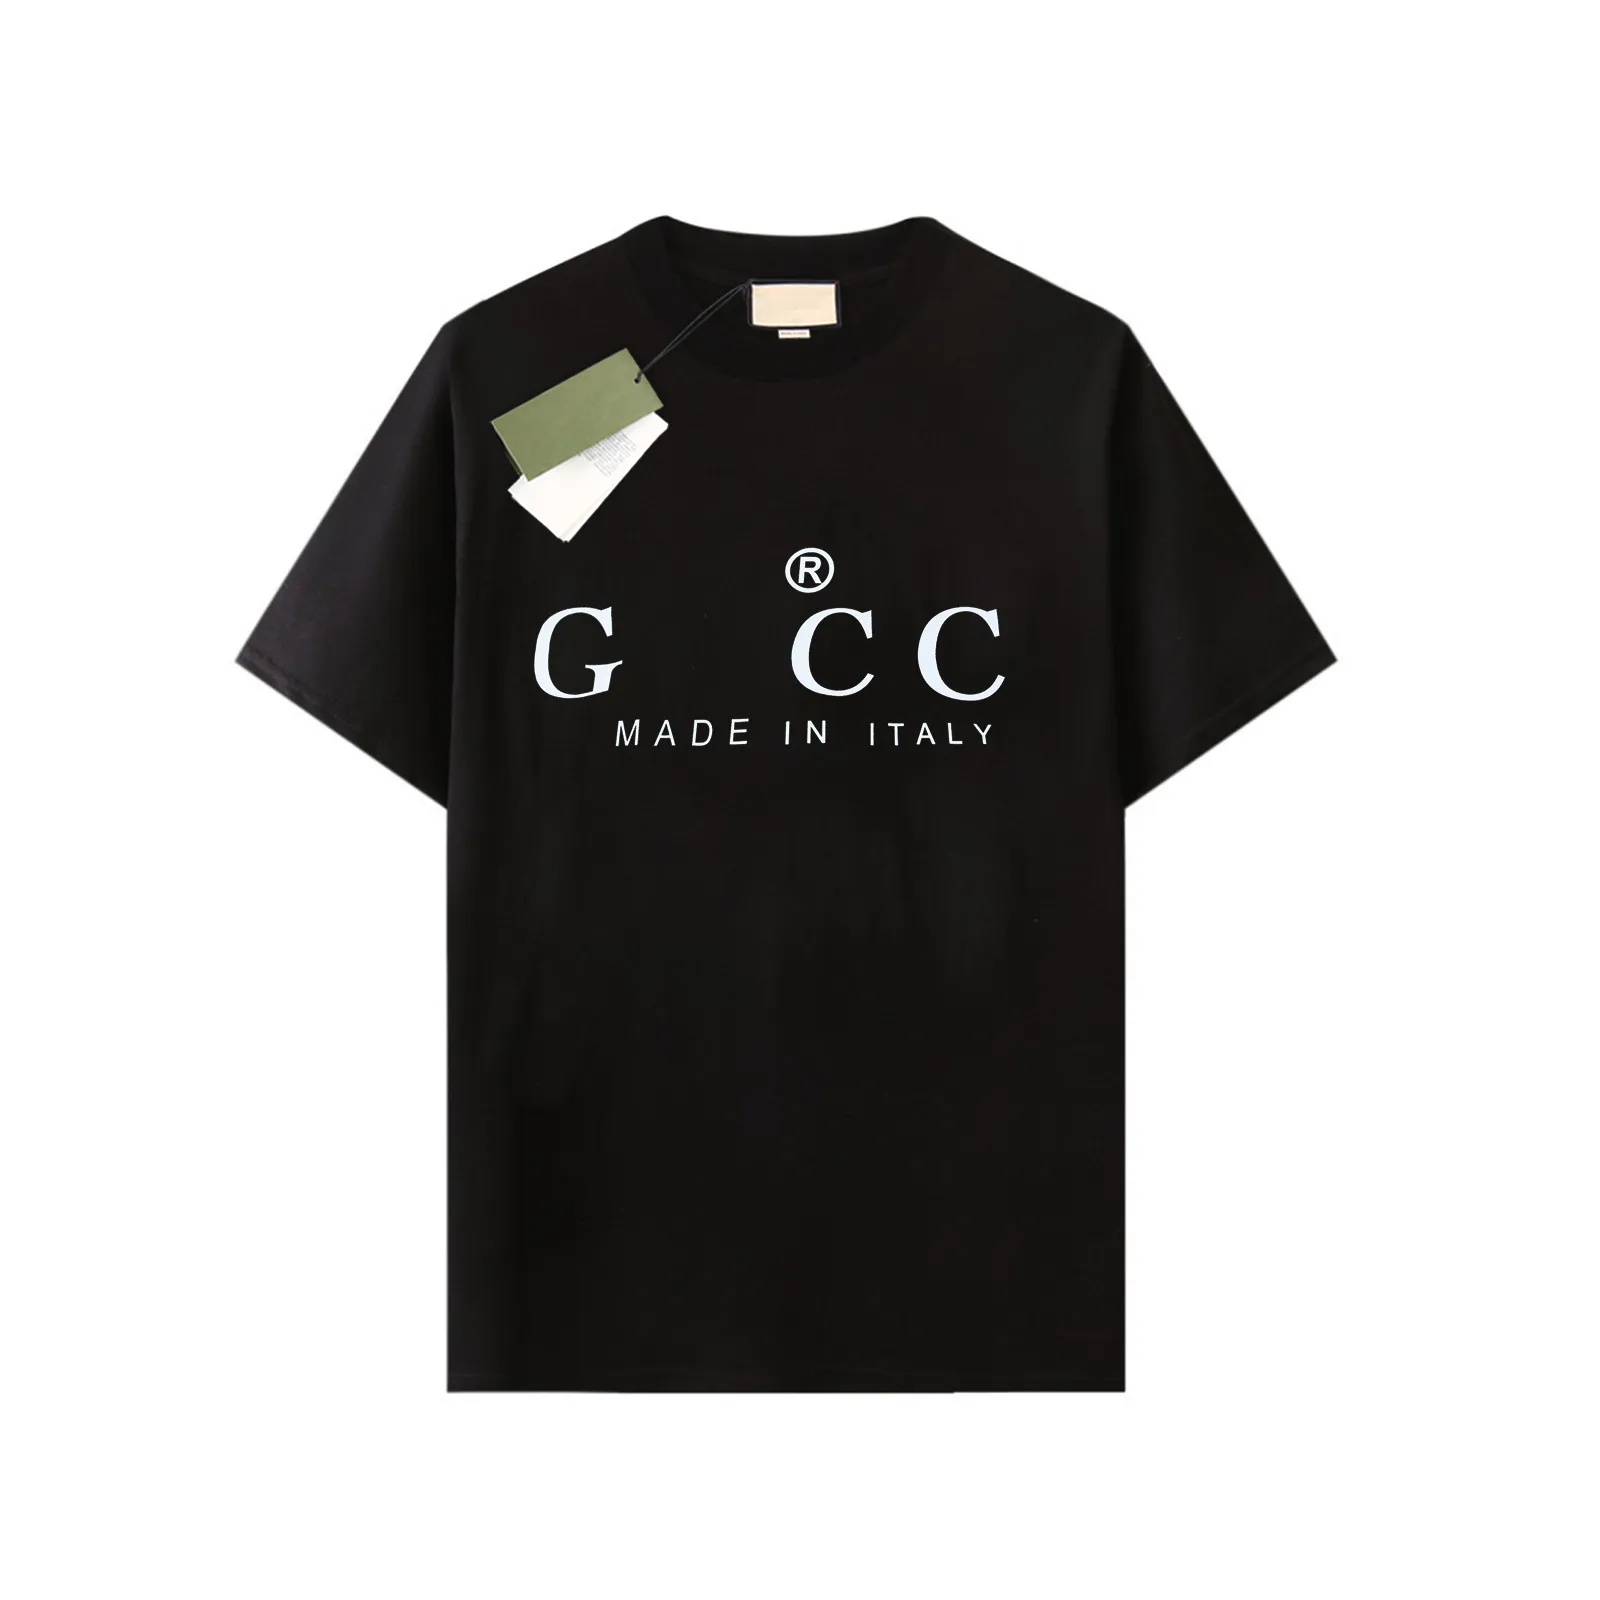 Designerska koszulka marka gu t męskie koszulki krótkie rękawowe letnie koszule swobodne koszule Hip Hop Streetwear Shorts